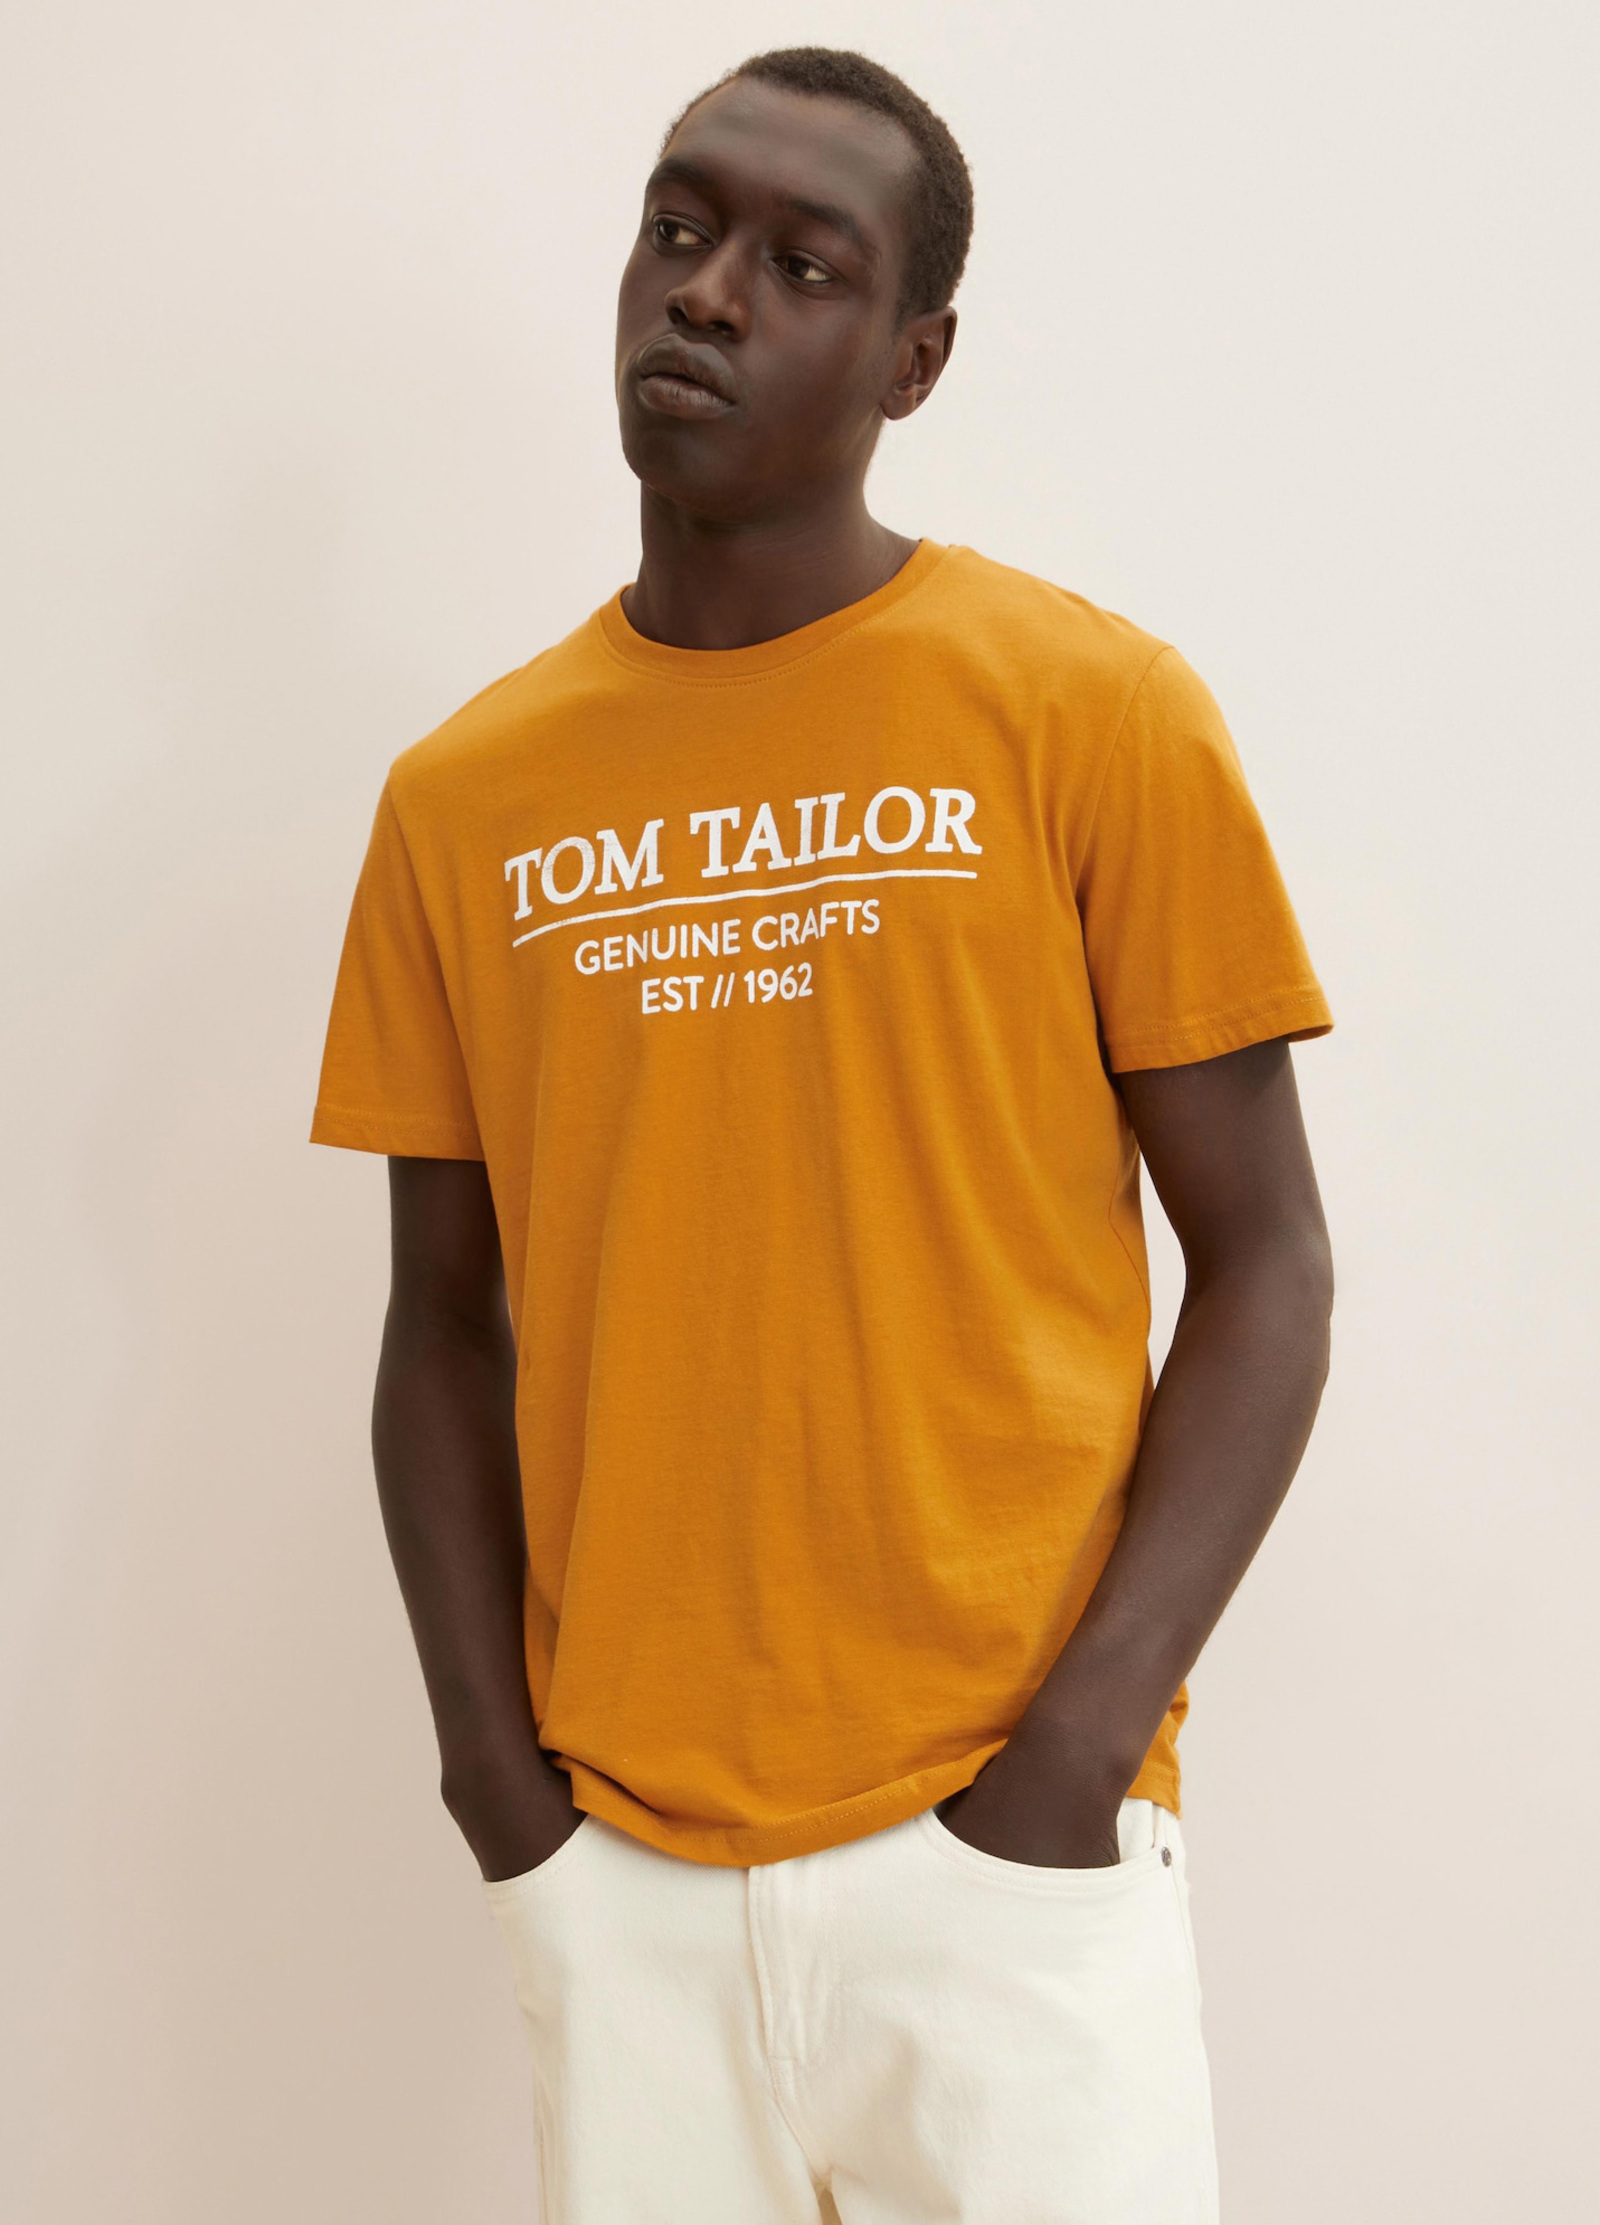 Tom Tailor® T-shirt Logo - Size Butter Brown Peanut L